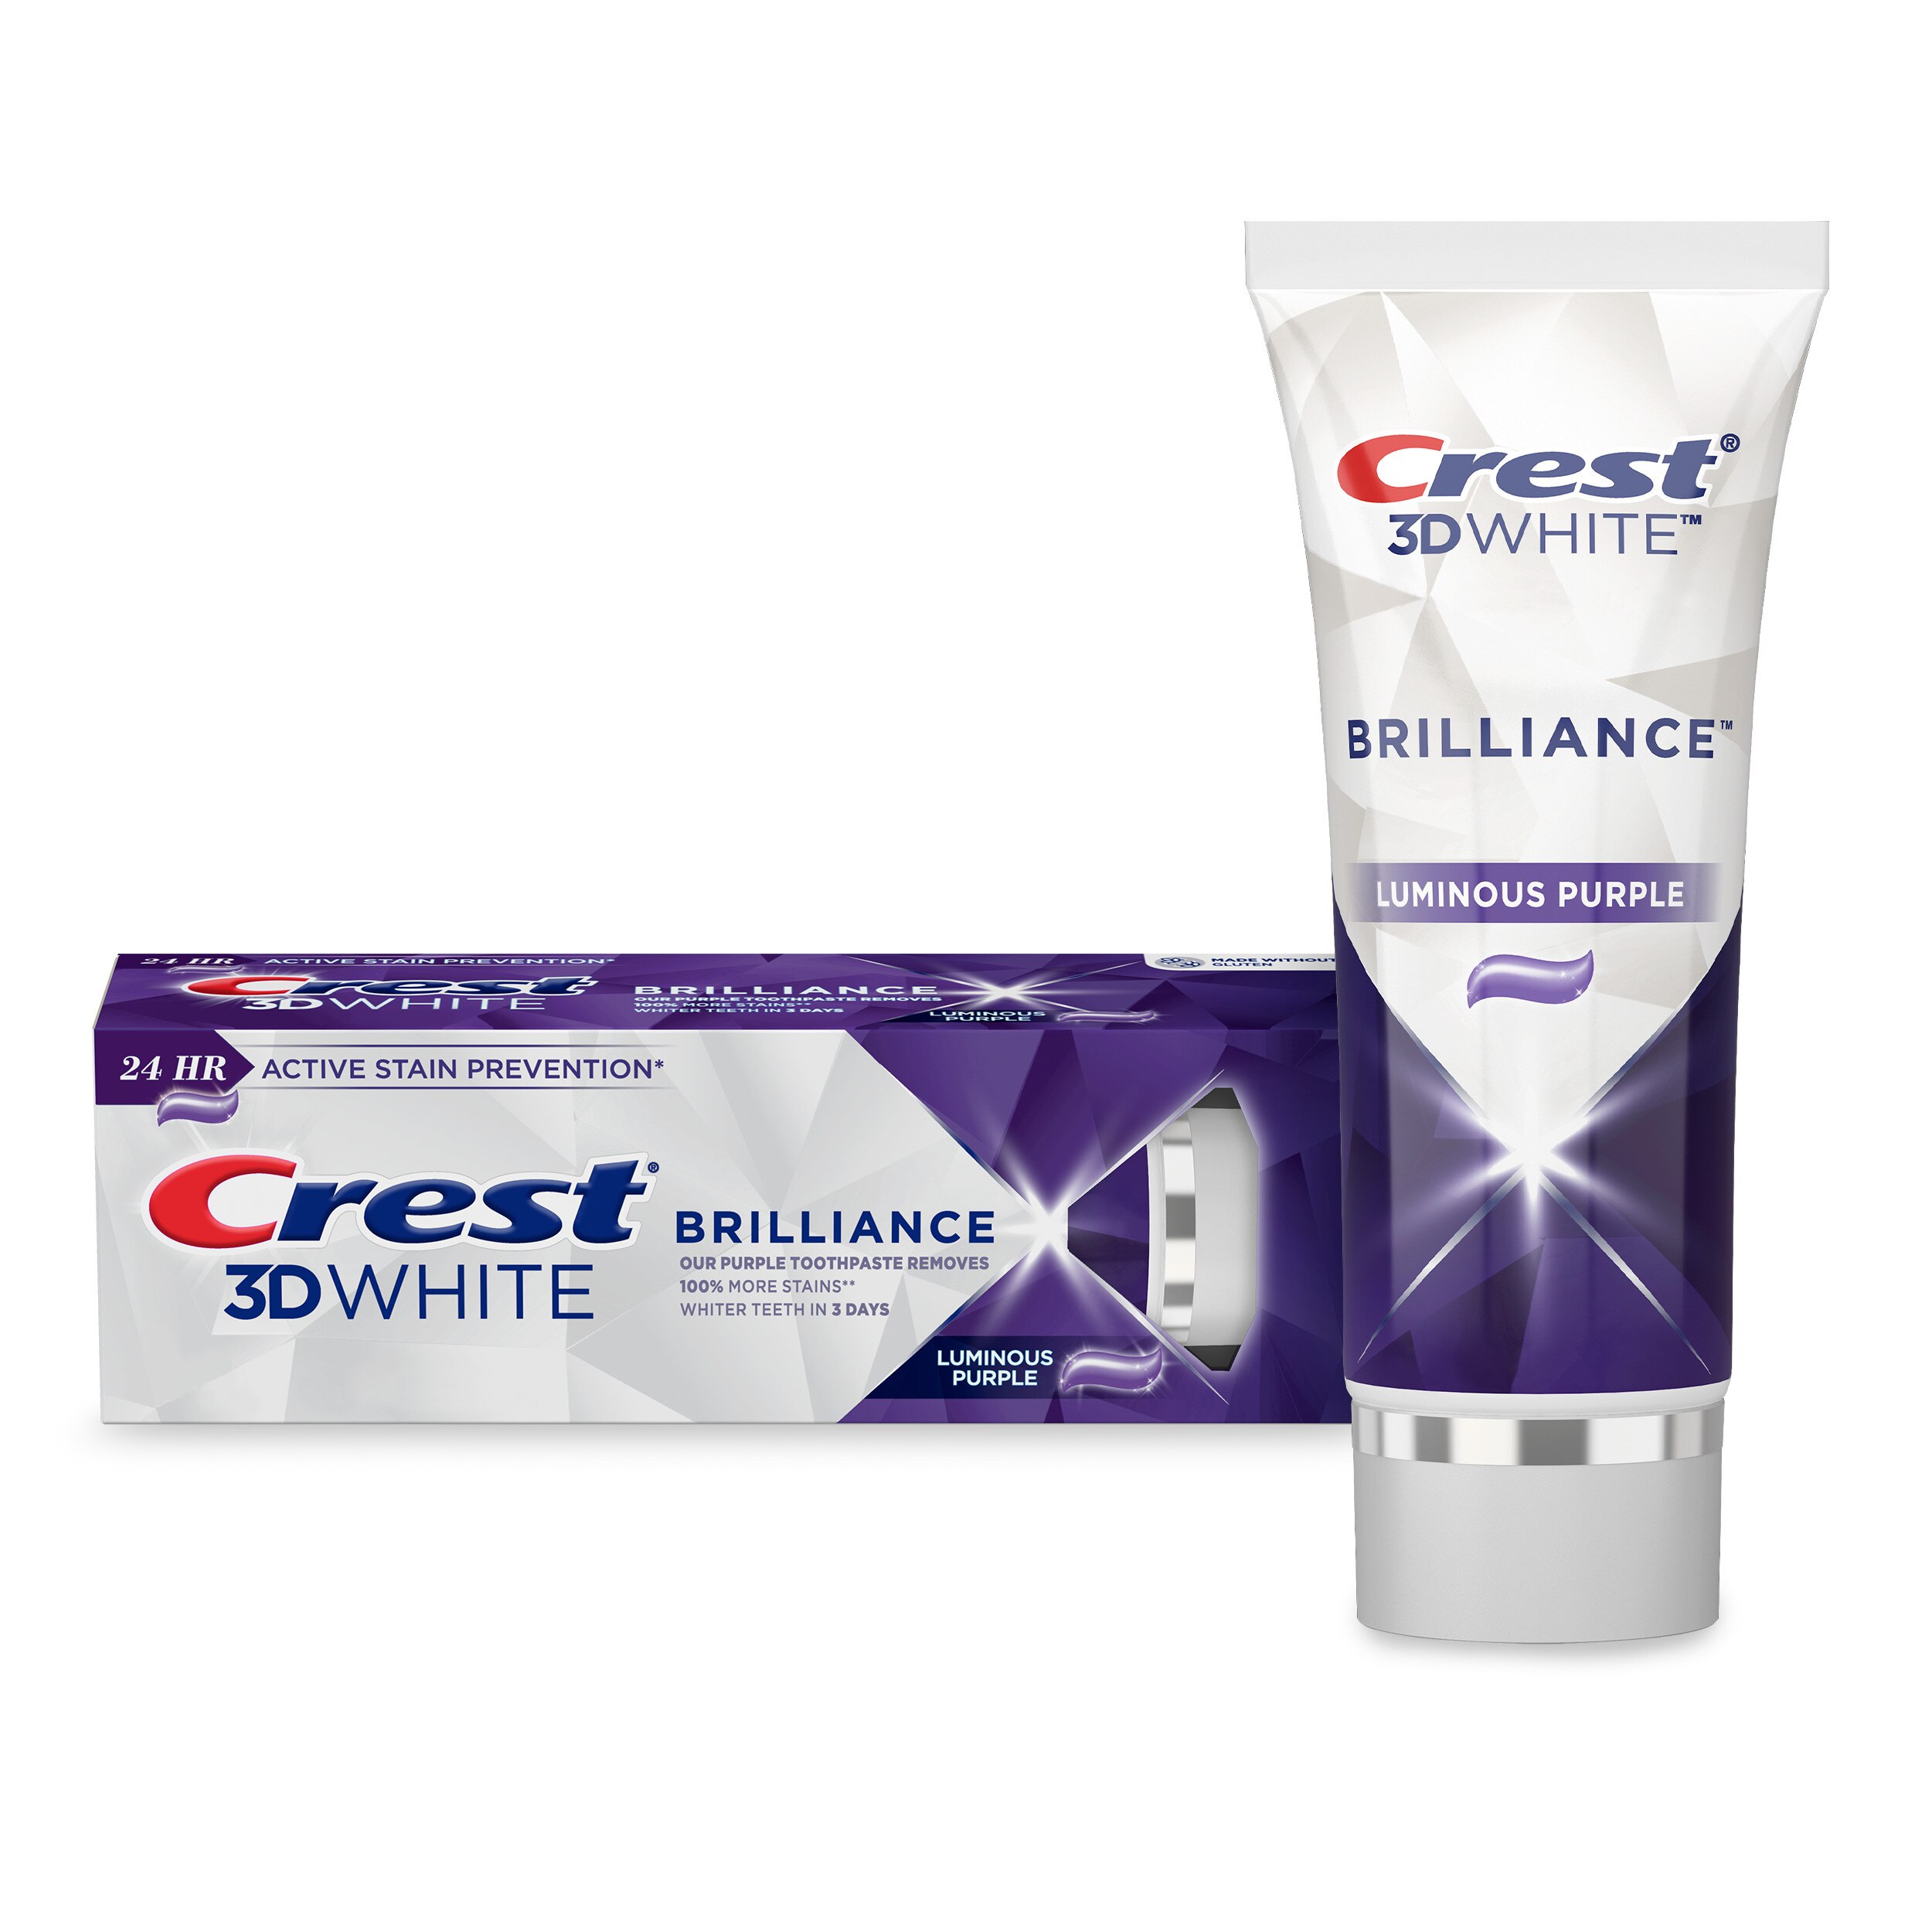 Crest 3D White Brilliance Fluoride Anticavity 24 Hour Active Stain Prevention Toothpaste, Luminous Purple, 3.5 Oz , CVS